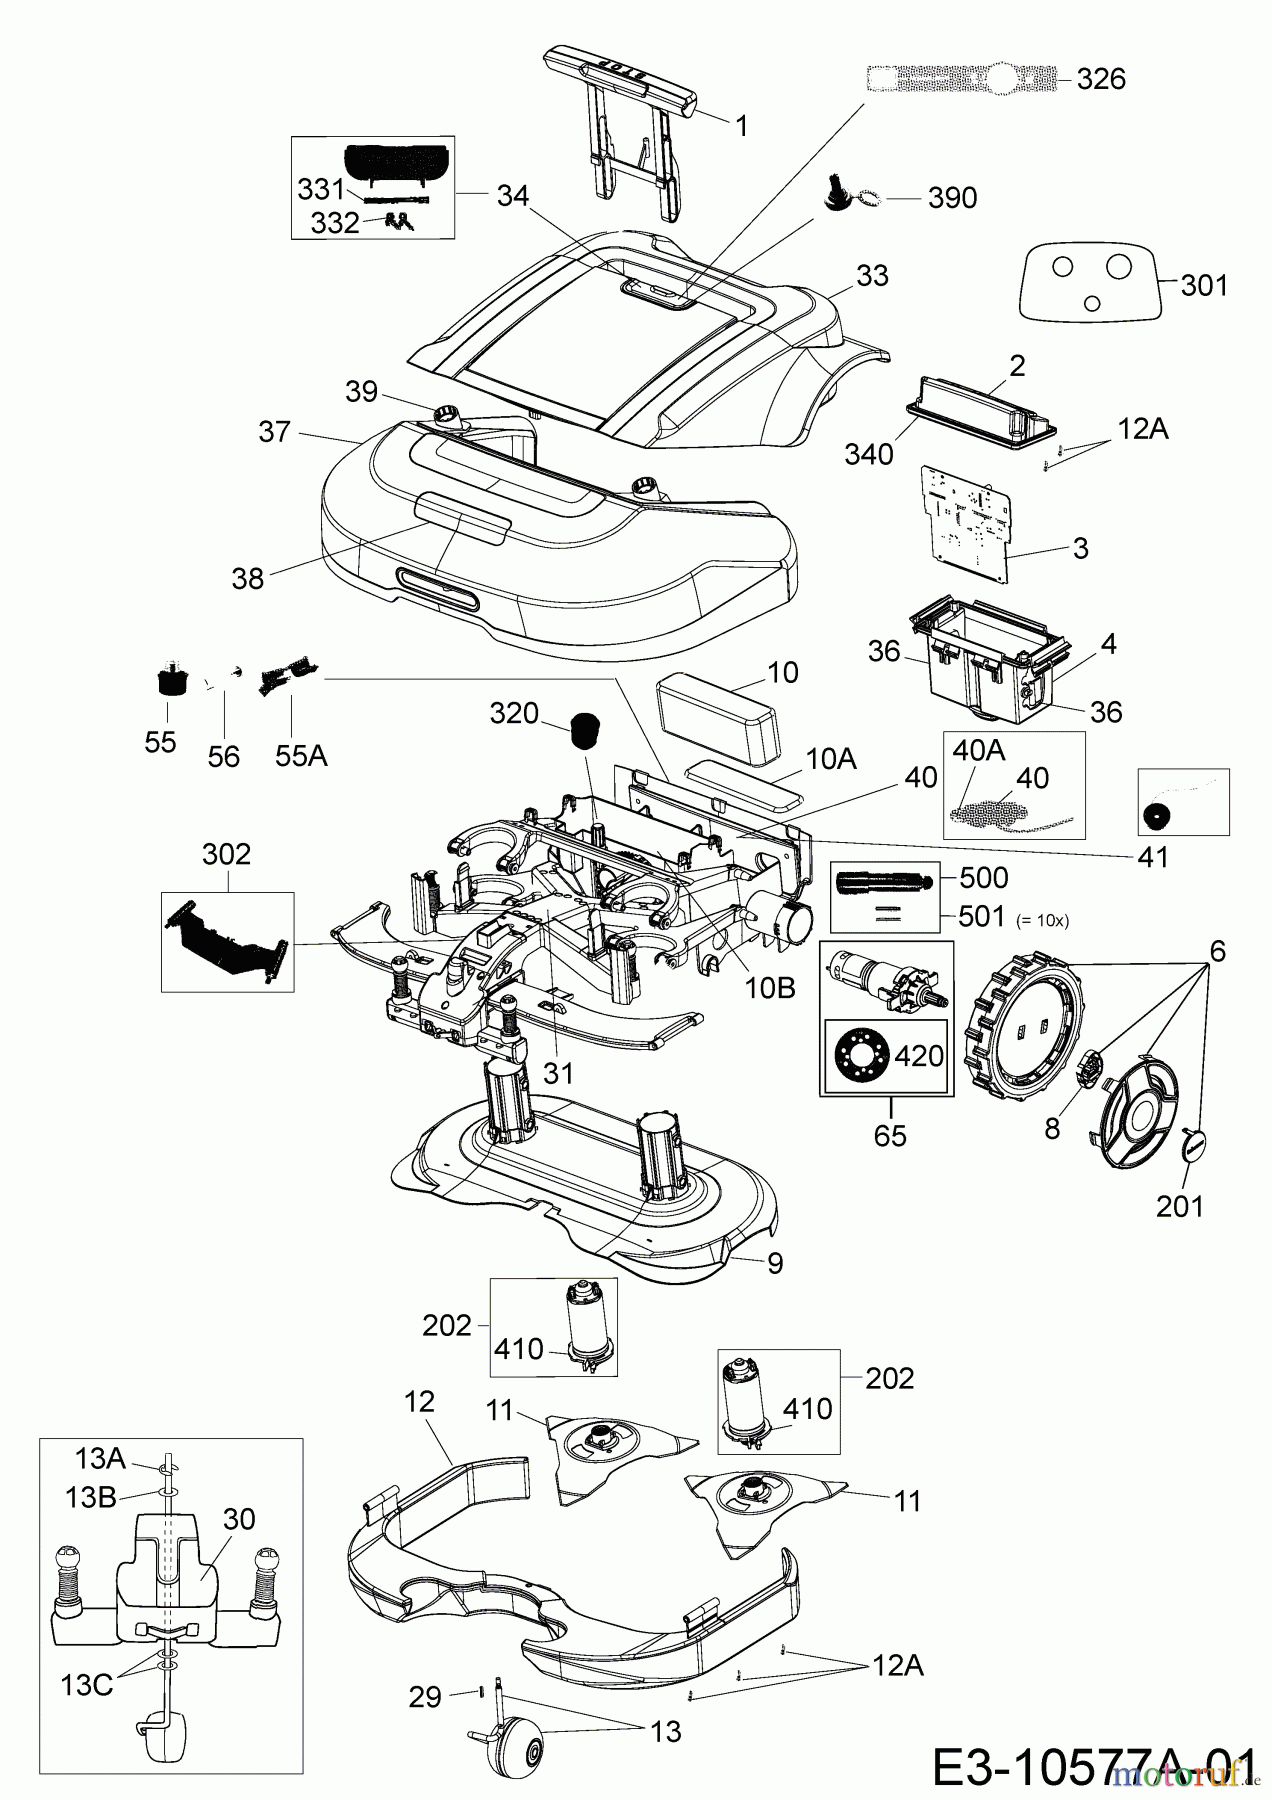  Robomow Mähroboter RS630 PRD6300B  (2015) Elektromotore, Gehäuse, Messer, Räder